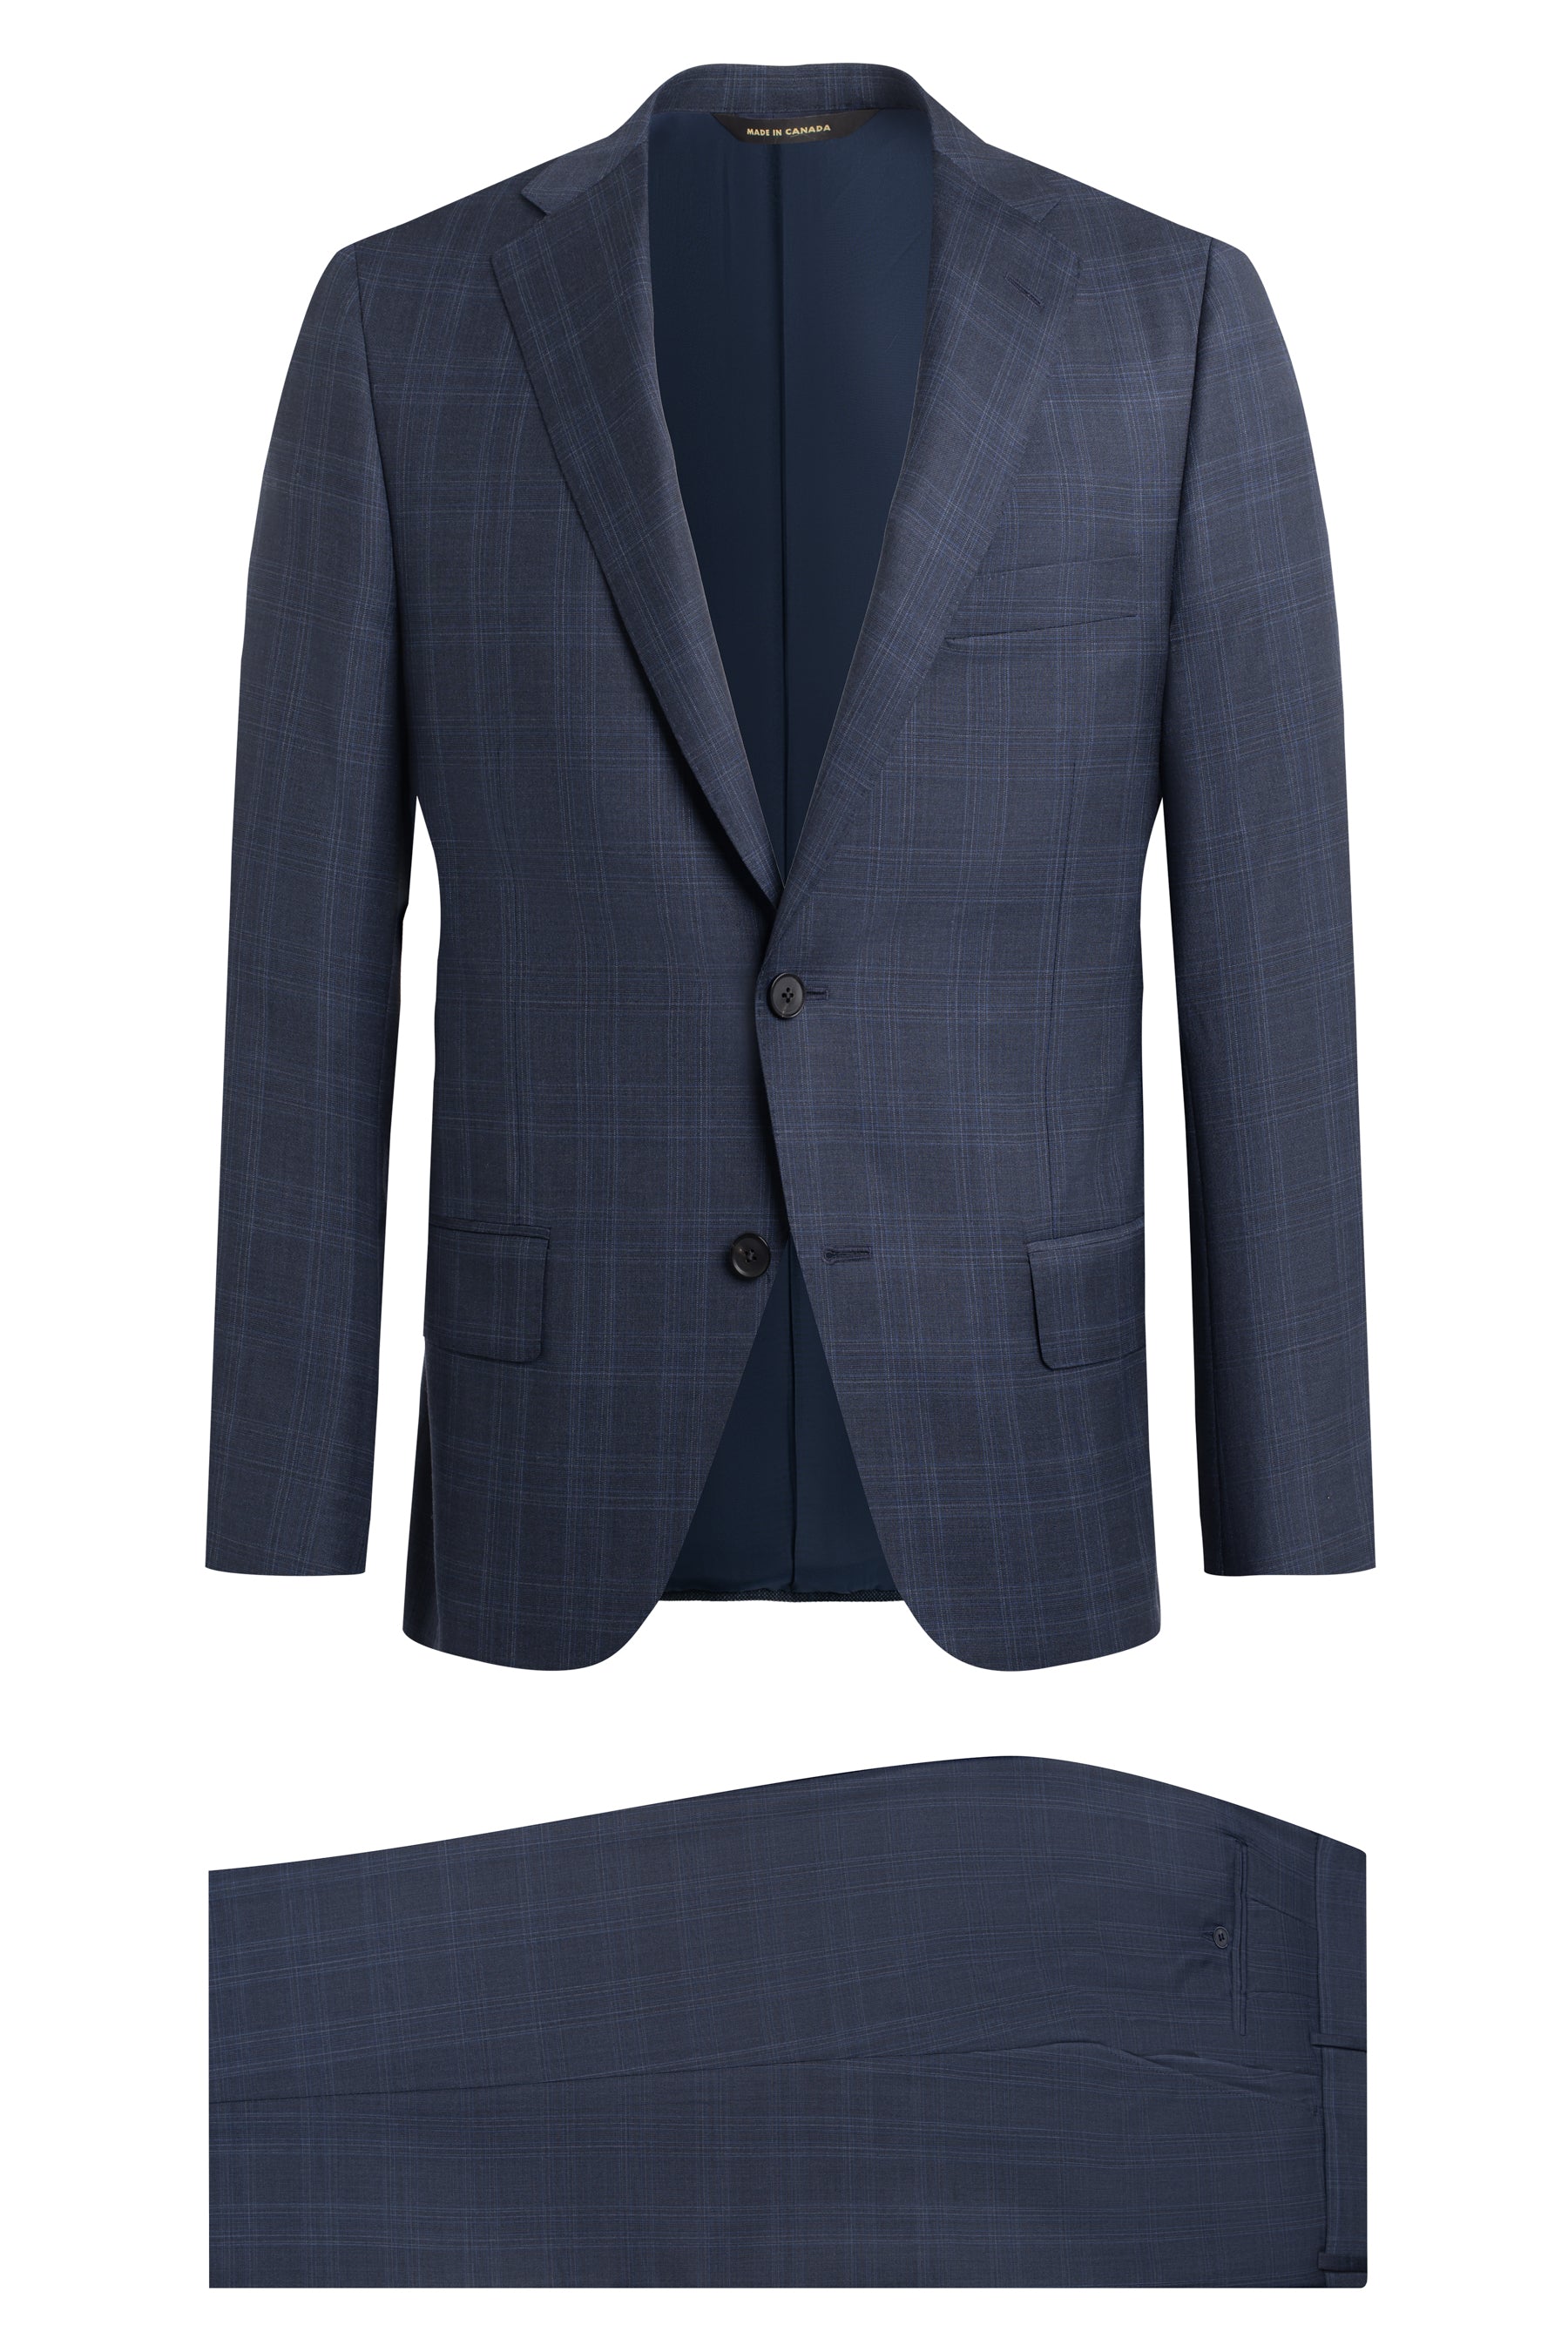 Samantha Stutsman on LinkedIn: #suits #custom #customclothing #quality  #convenience #newengland #boston